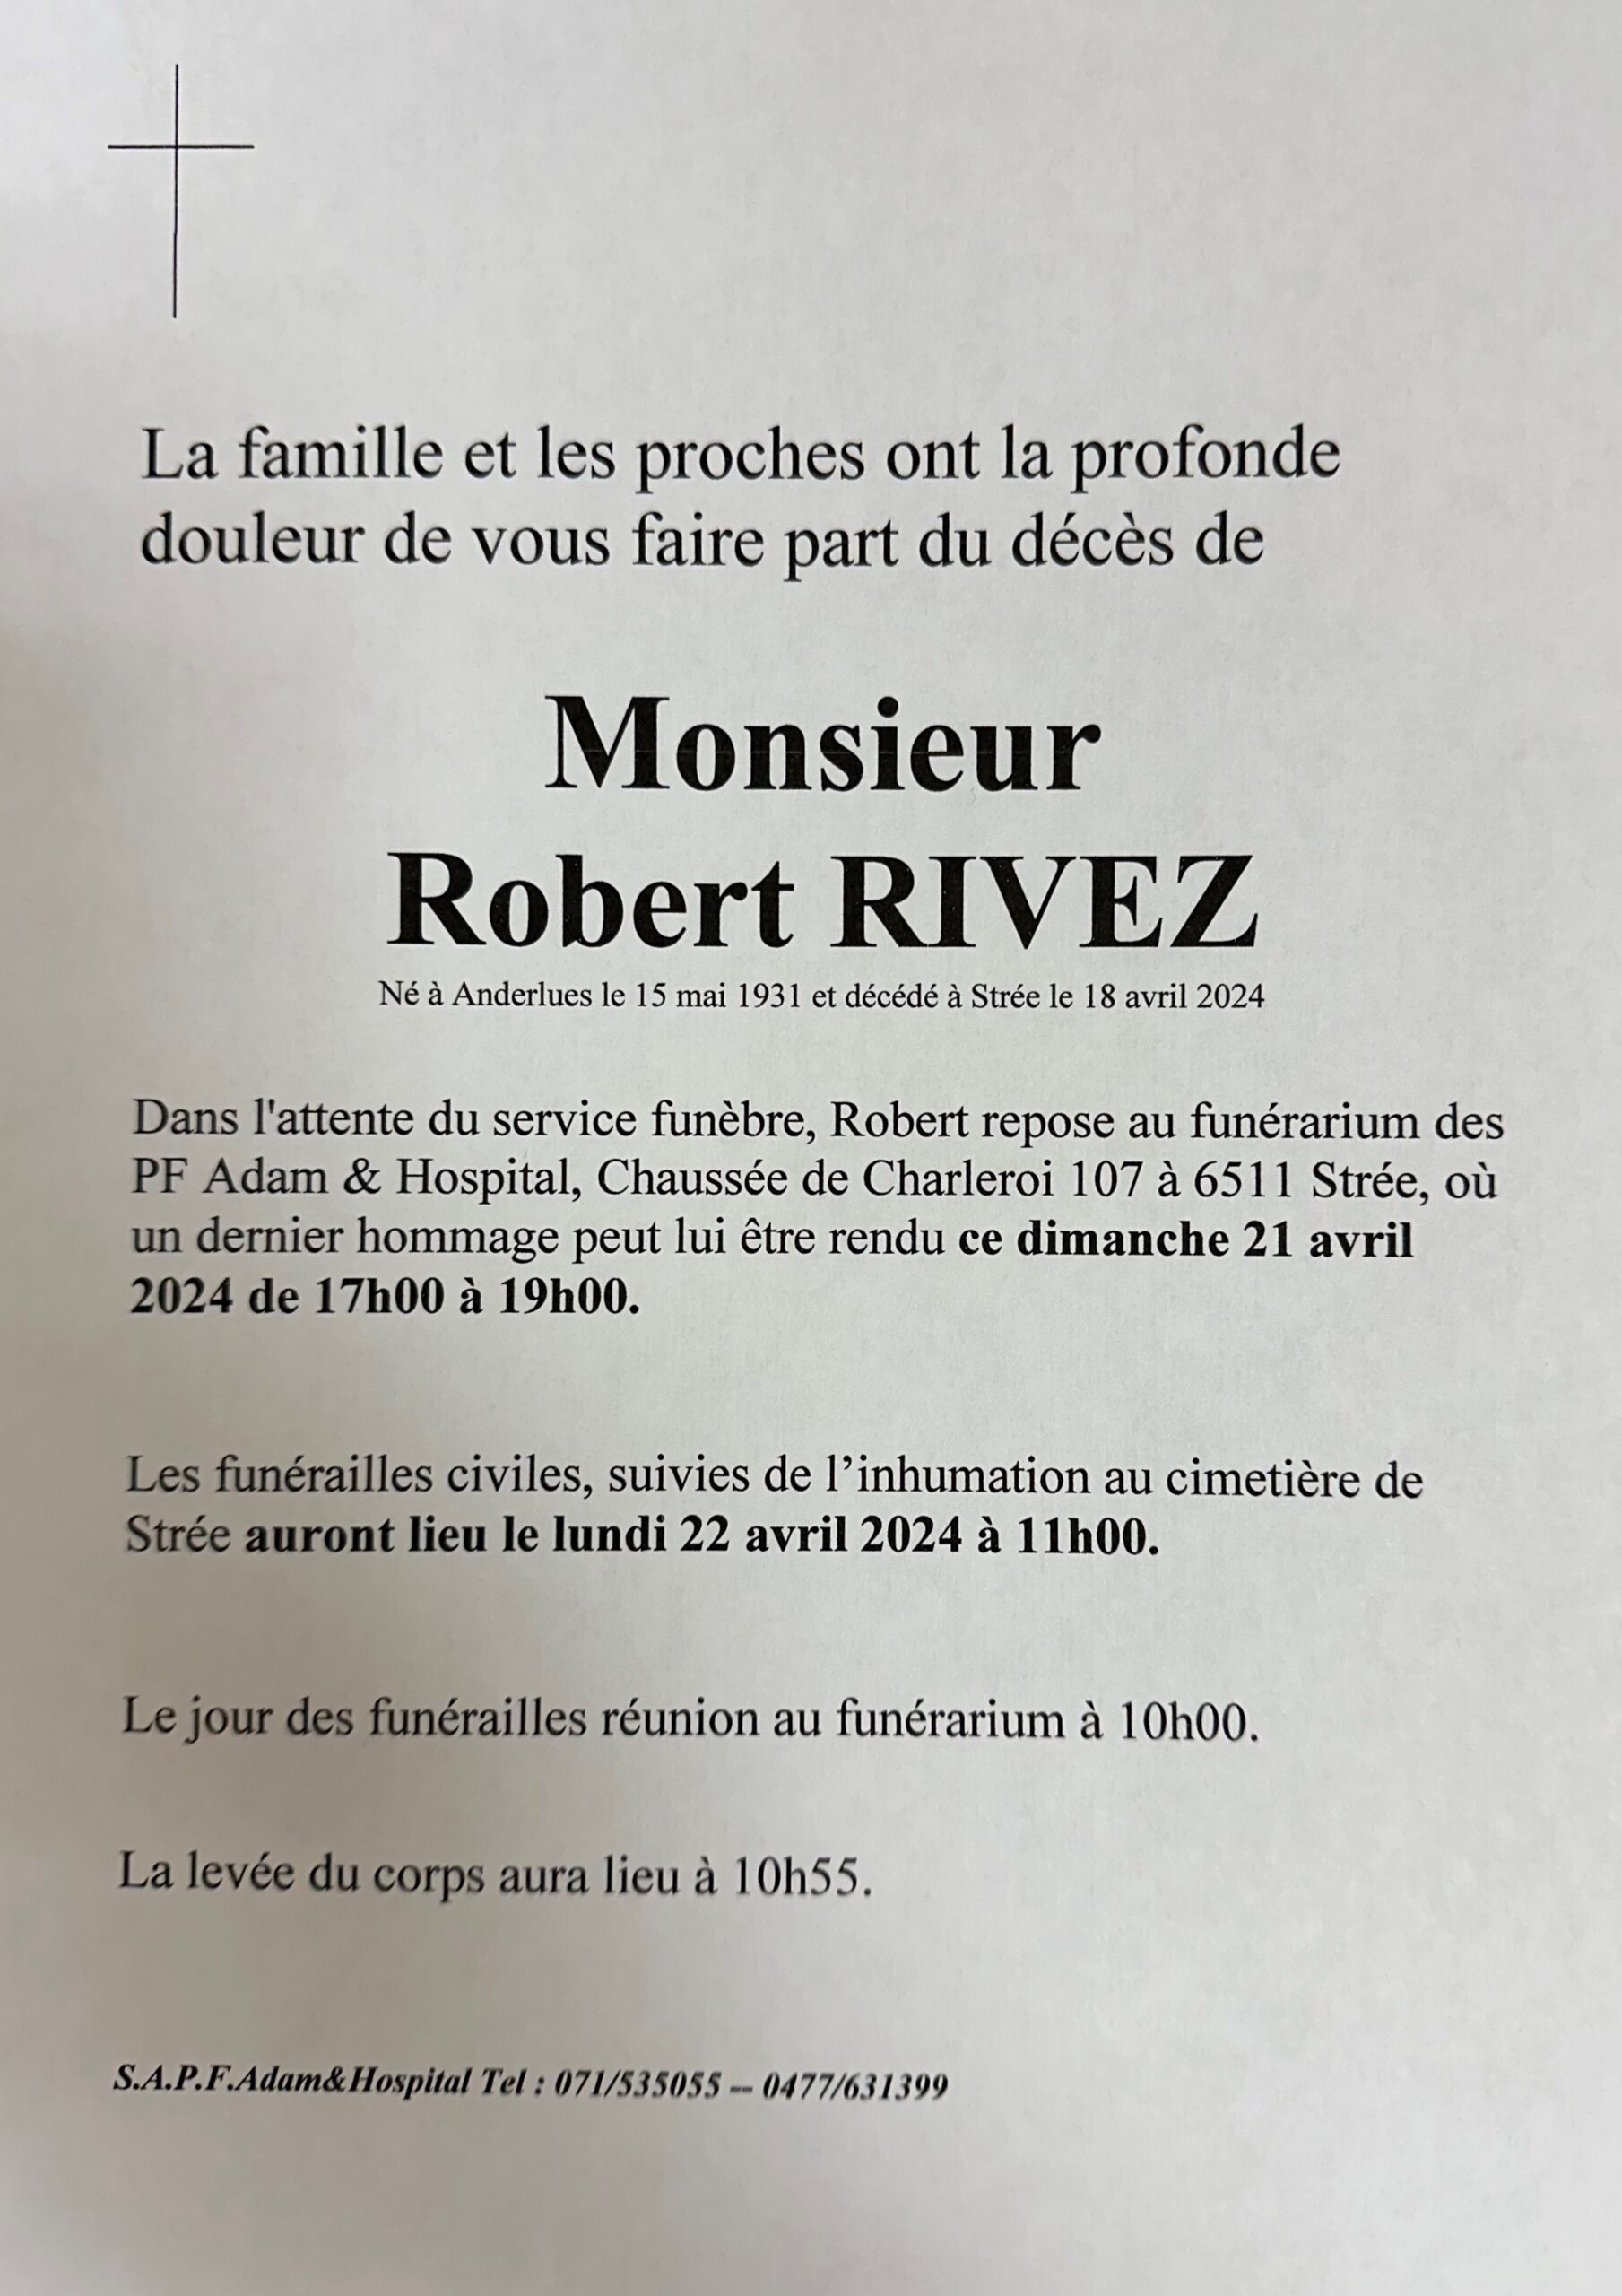 ROBERT RIVEZ scaled | Funérailles Adam Hospital